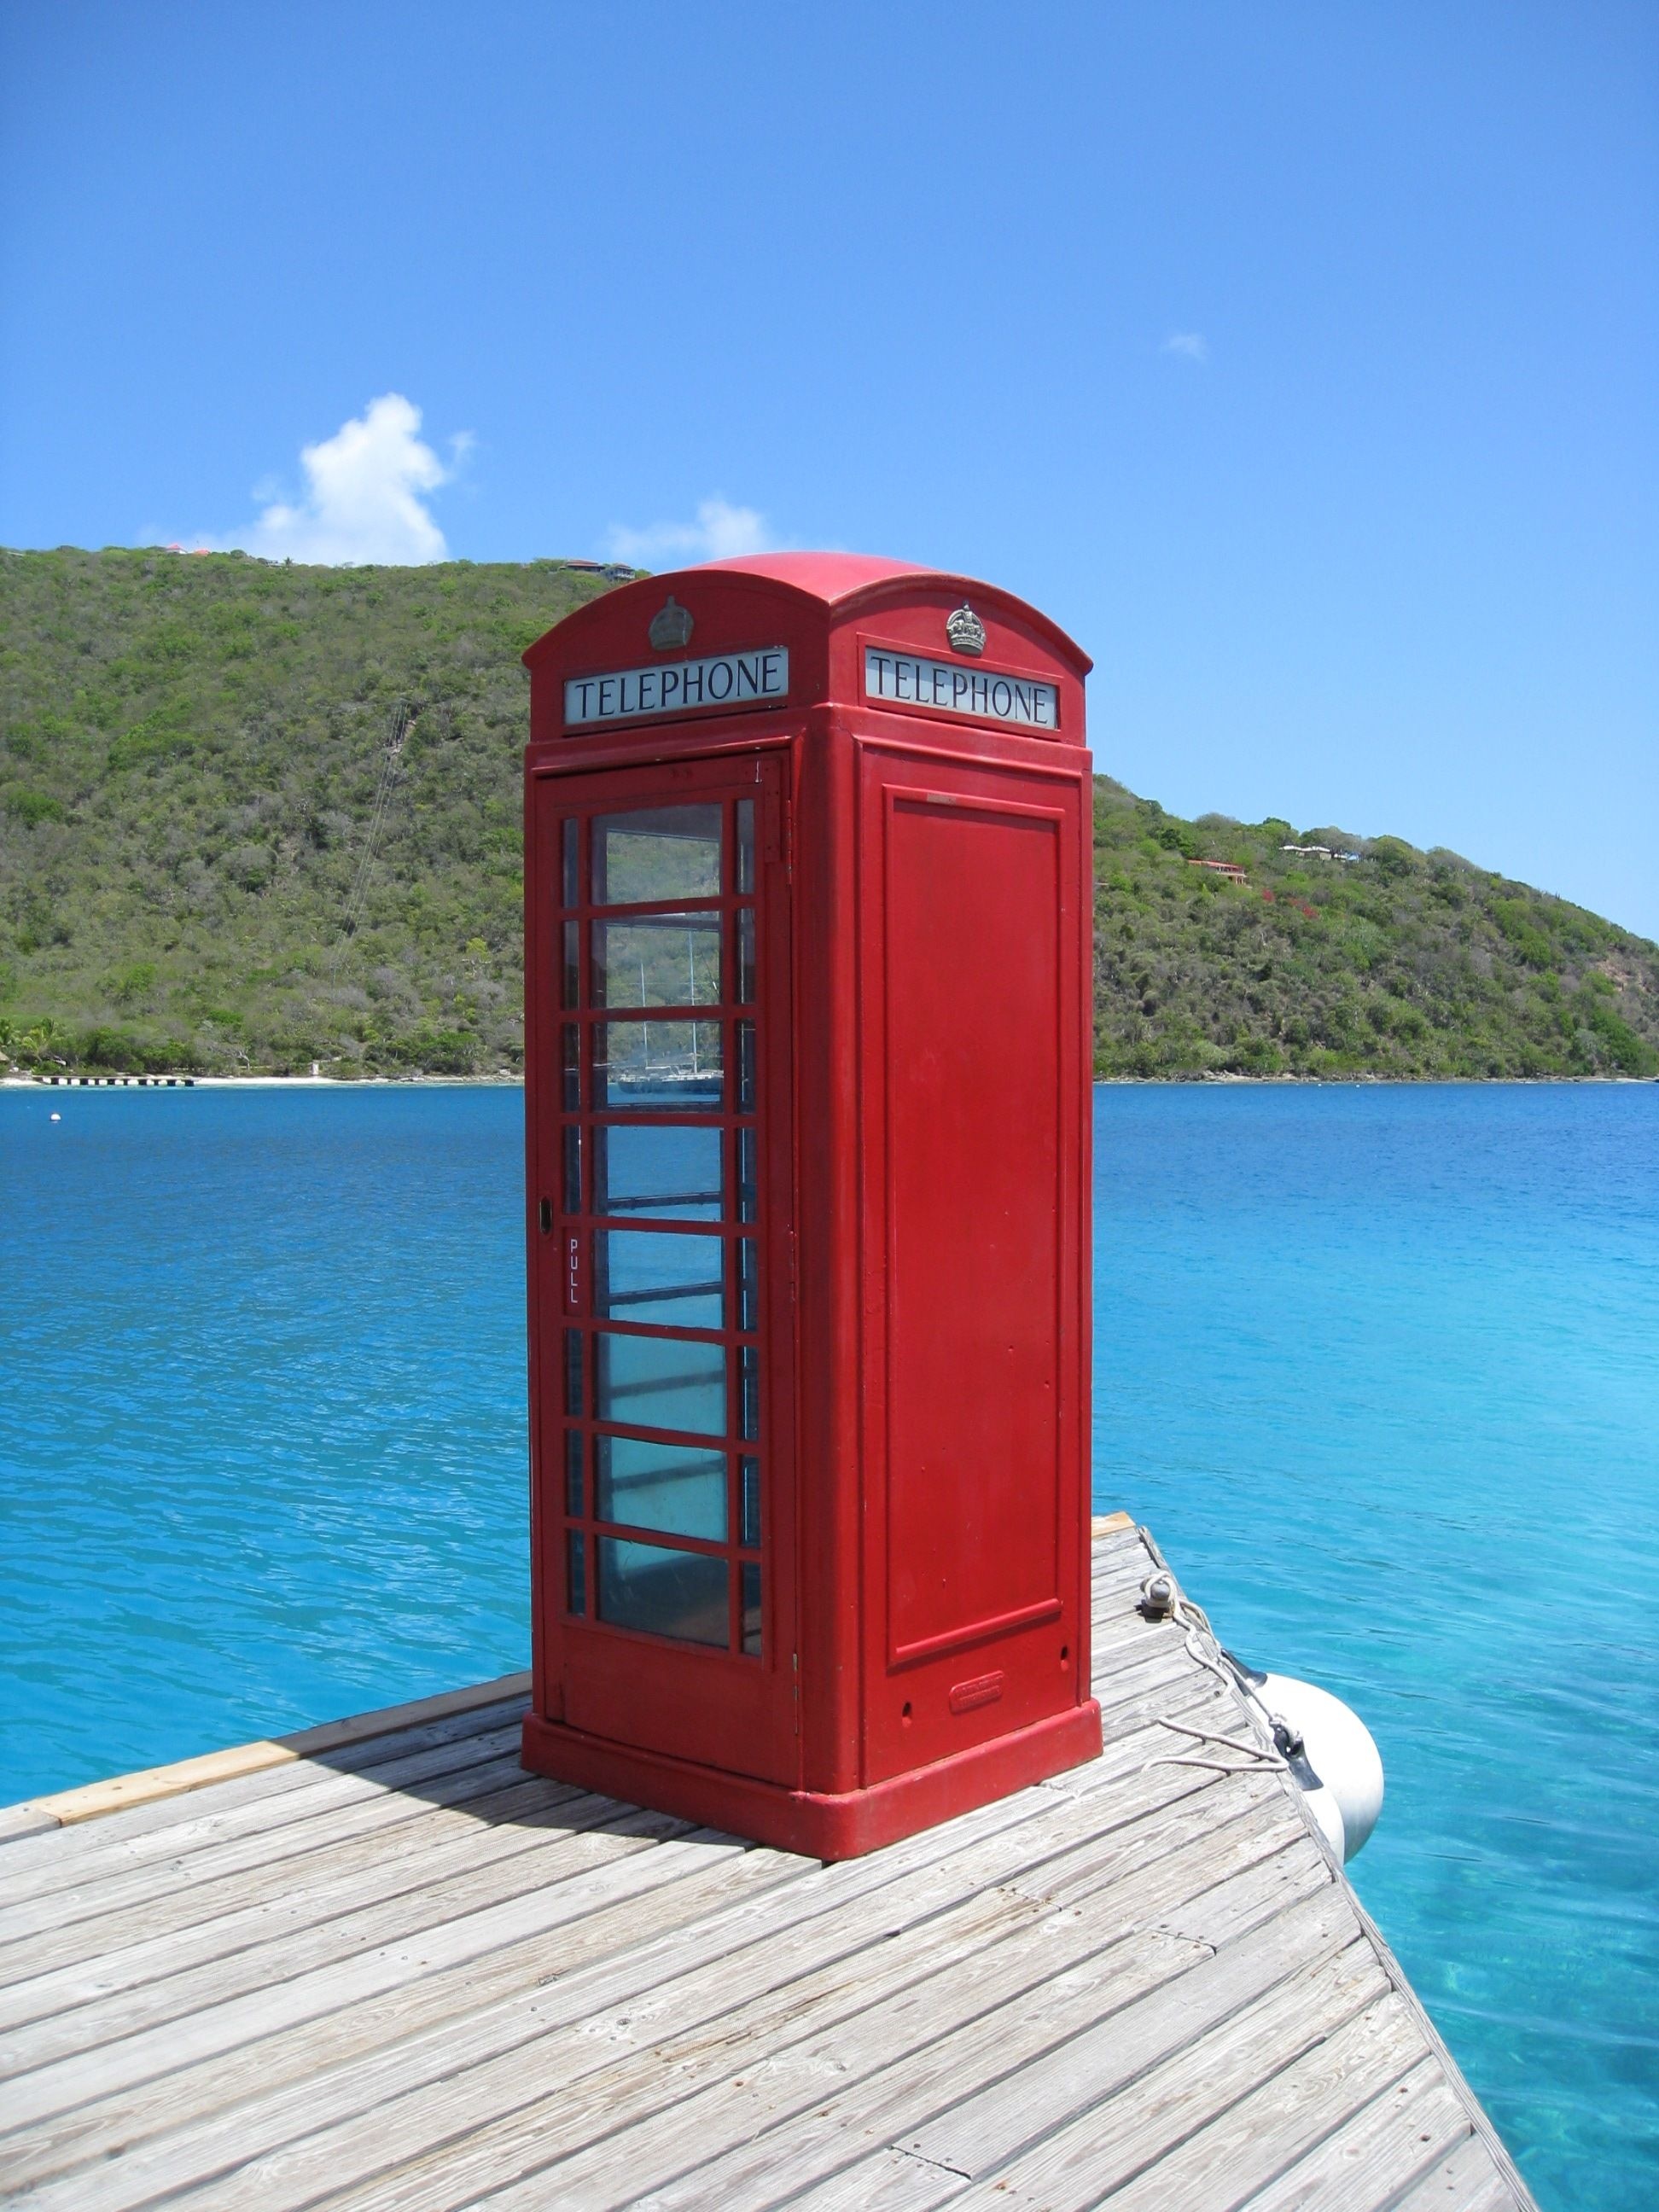 Marina Cay, Red box, Telephone booth, English telephone booth, 1950x2600 HD Phone